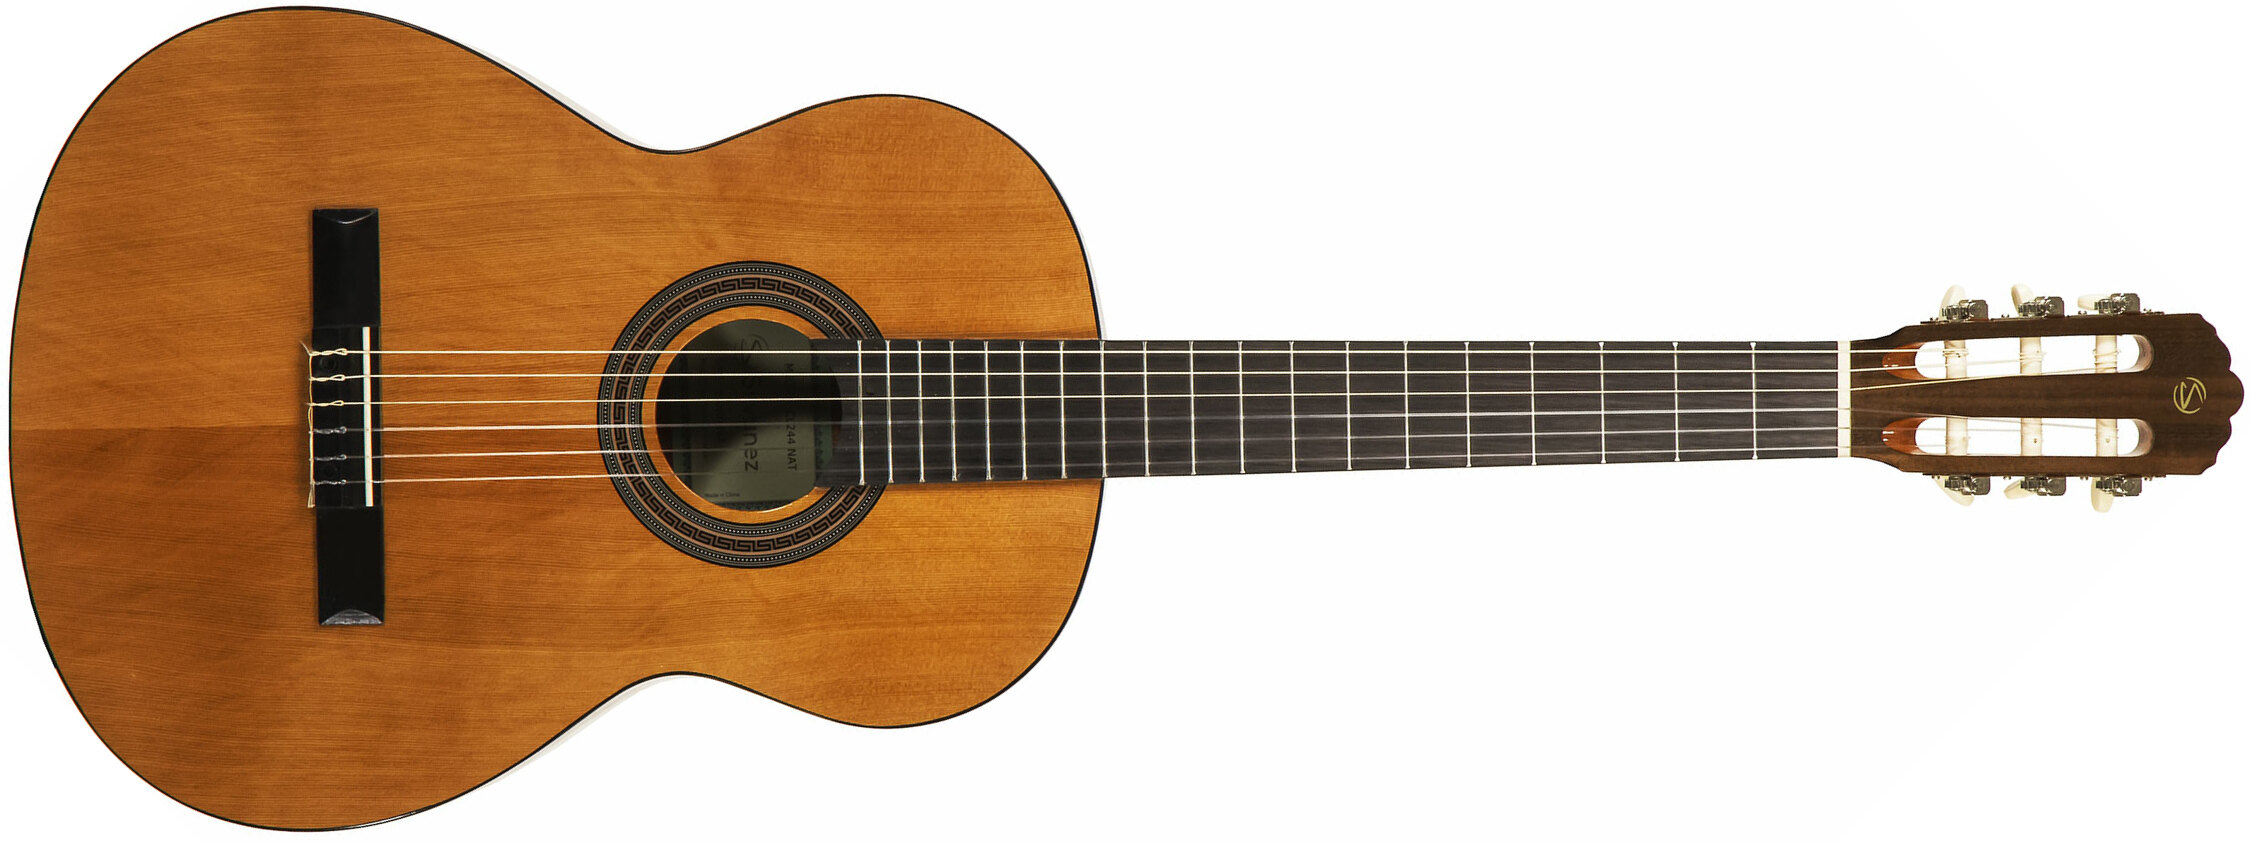 Silvanez Cl244 Nat Cedre Sapele Ama - Natural - Classical guitar 4/4 size - Main picture